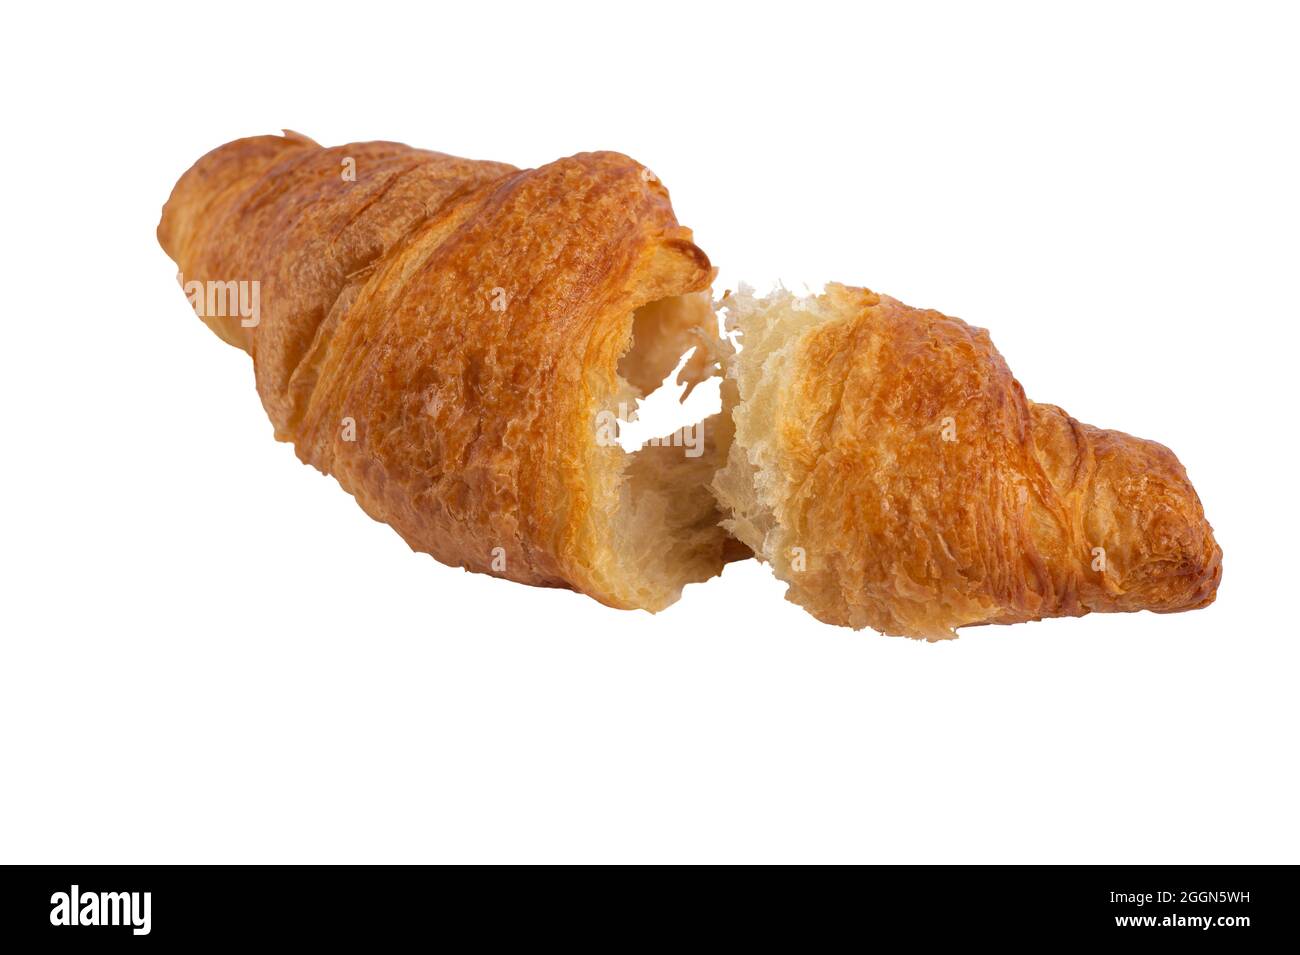 Freshly baked broken croissant isolated on white background. Stock Photo